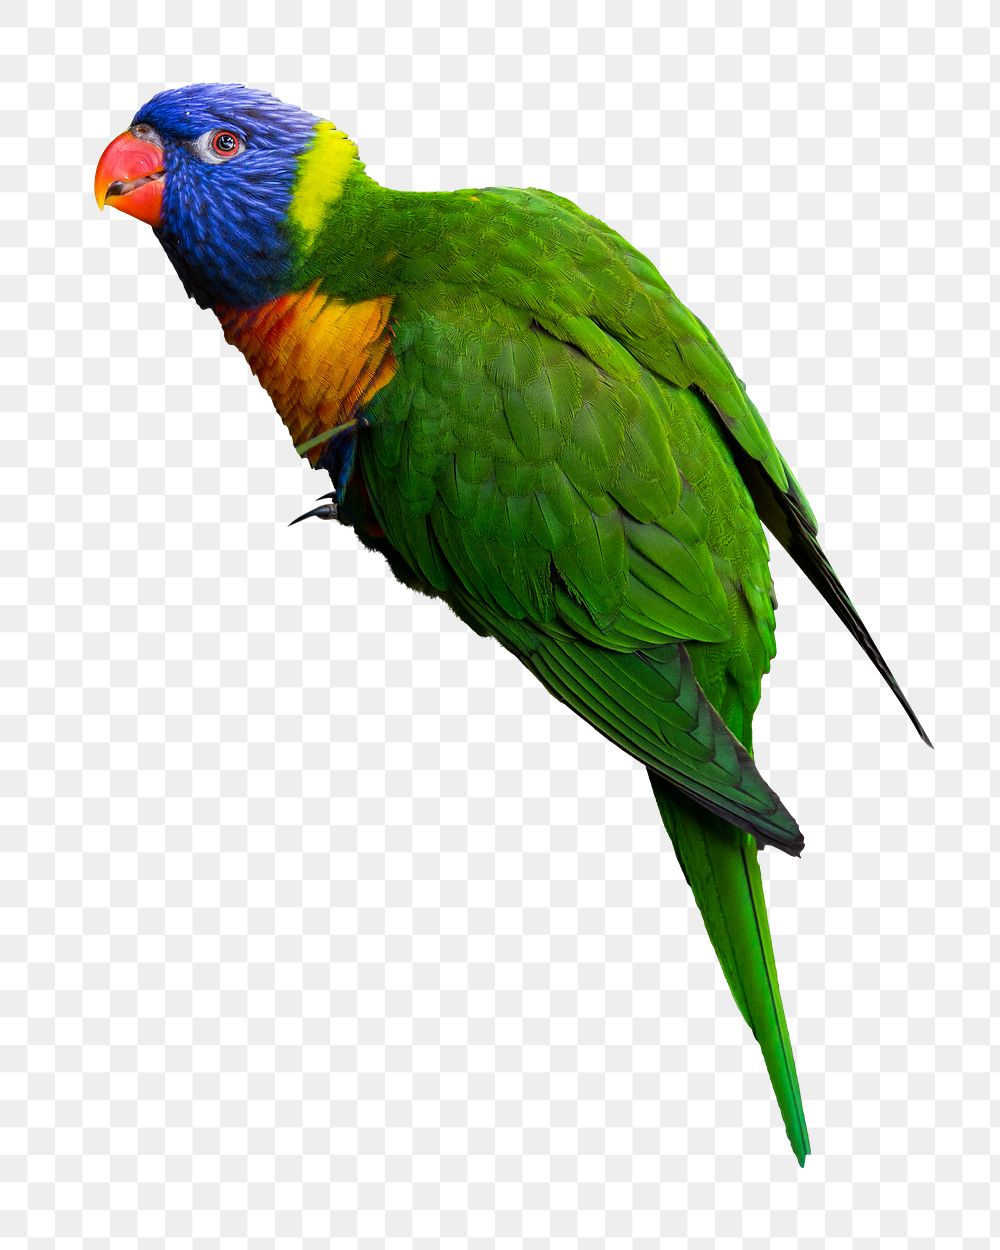 Rainbow lorikeet parrot png, transparent background